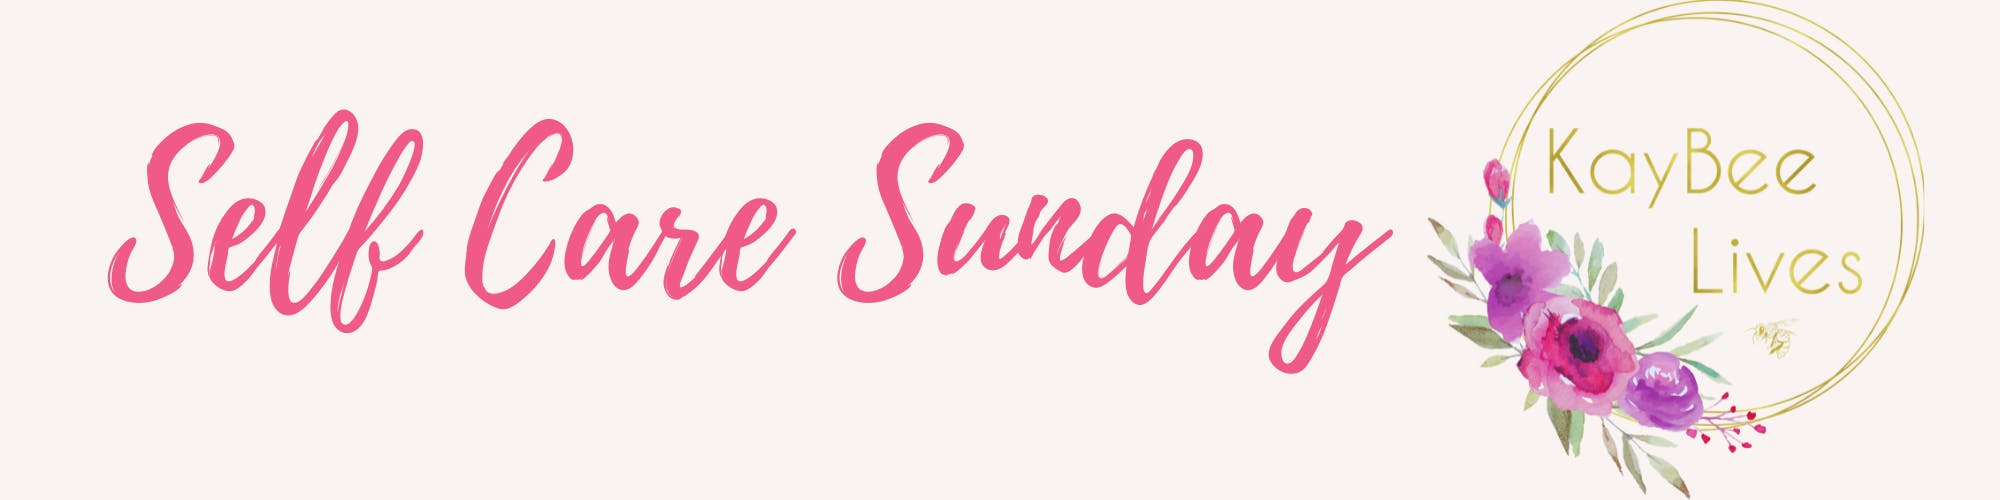 Self care Sunday banner